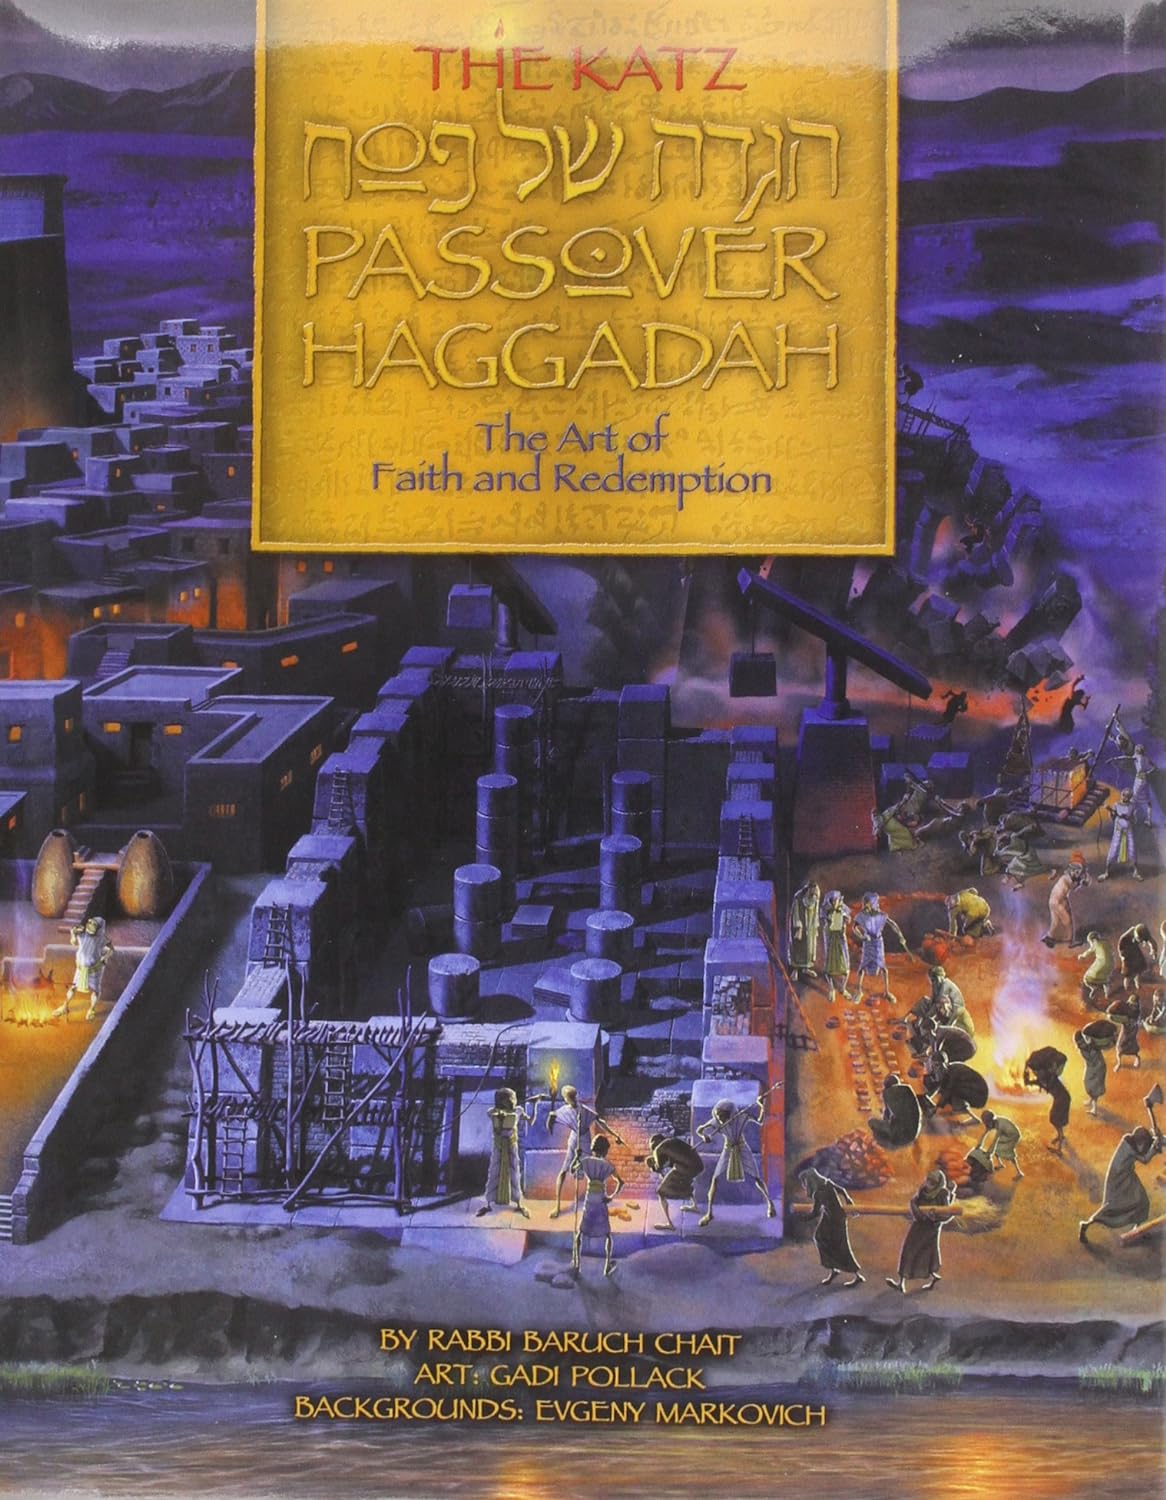 Best Jewish Books - Katz Passover Haggadah